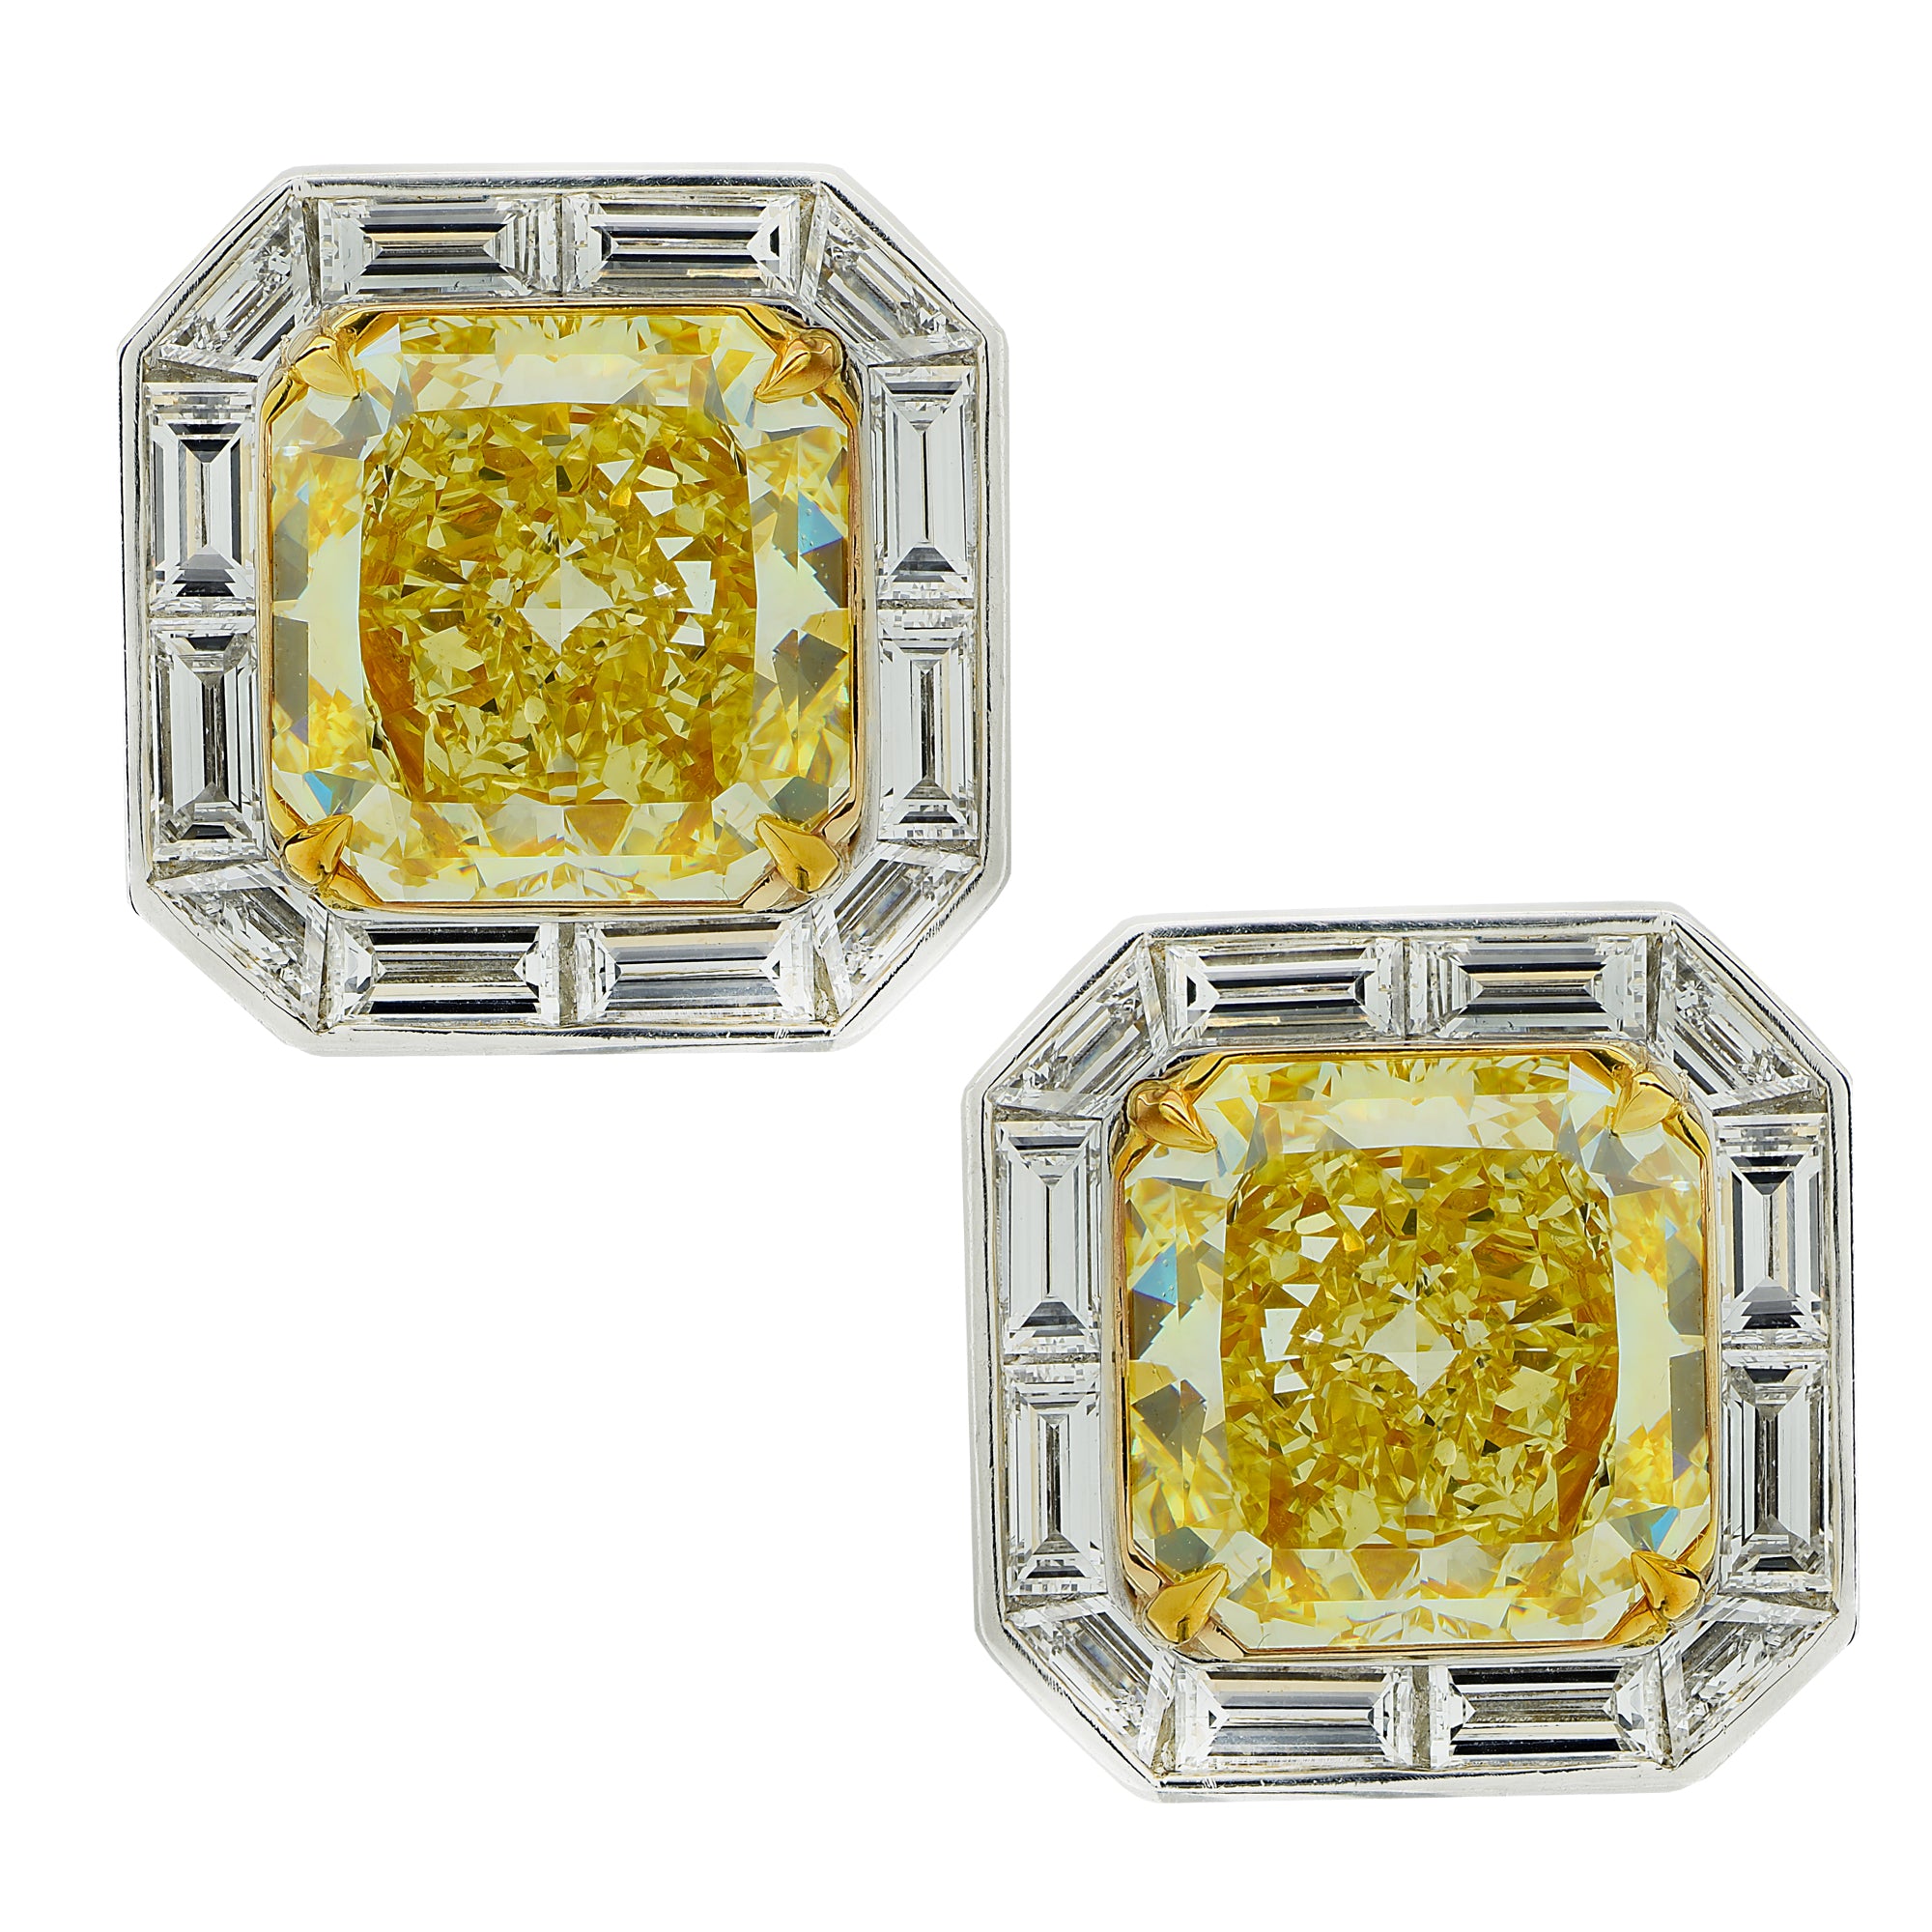 Vivid Diamonds GIA Certified 10.61 Carat Internally Flawless Fancy Intense Yellow Diamond Stud Earrings -V42617 - vividdiamonds